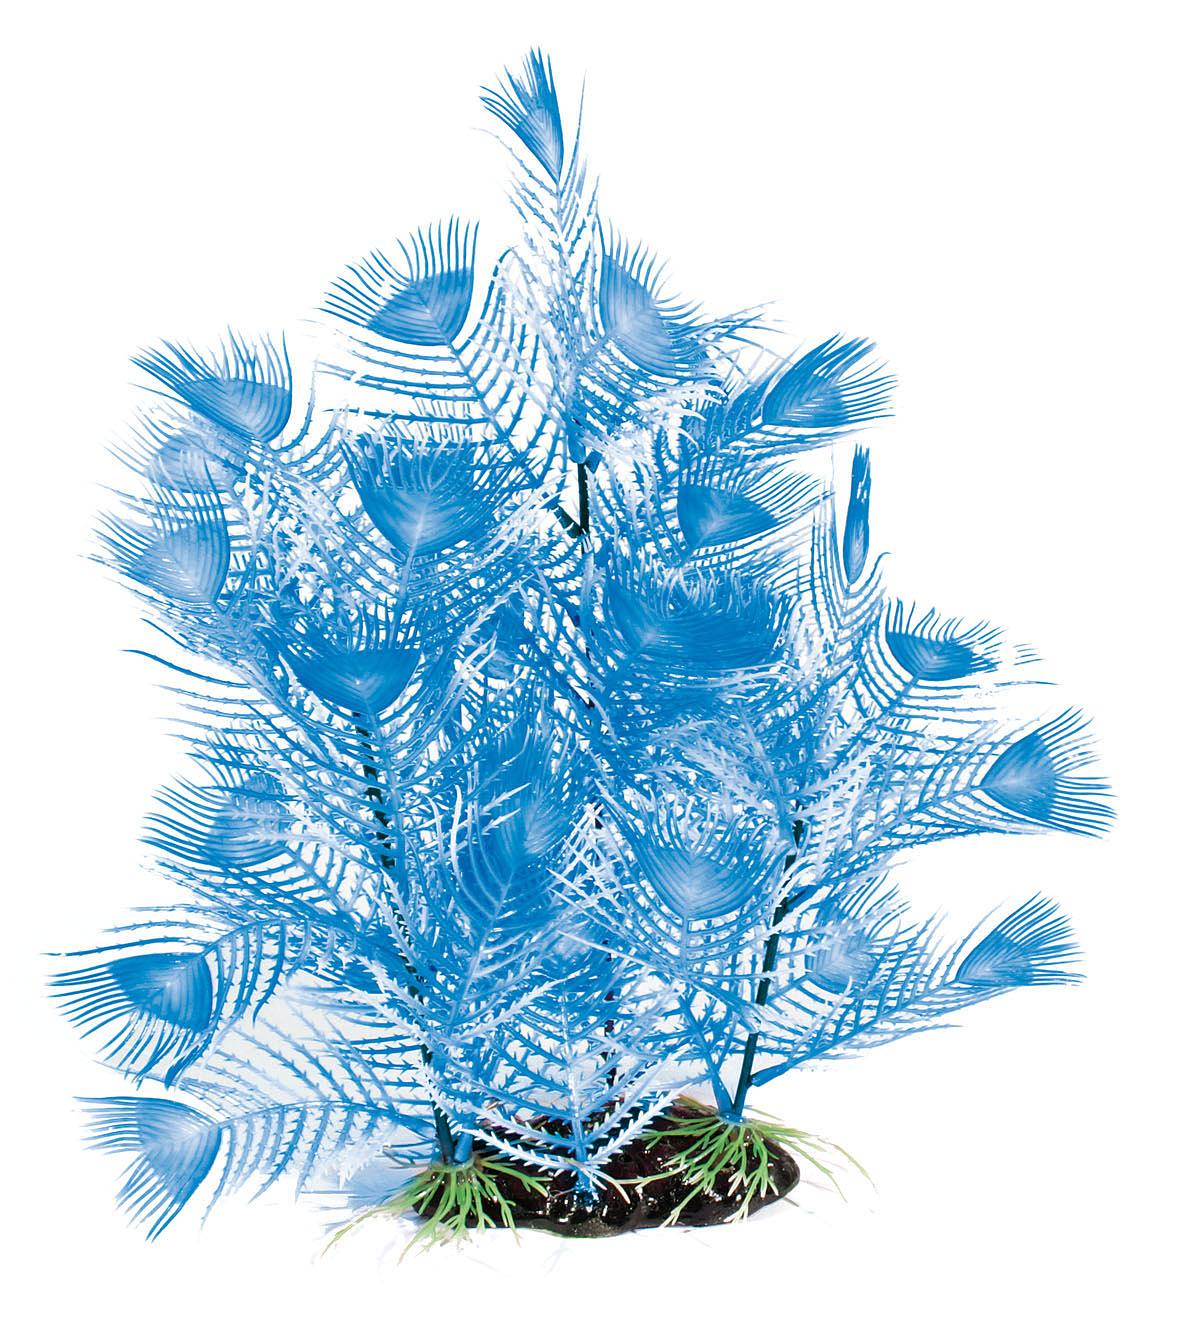 Amazonas Fantasy Plant AL, blau